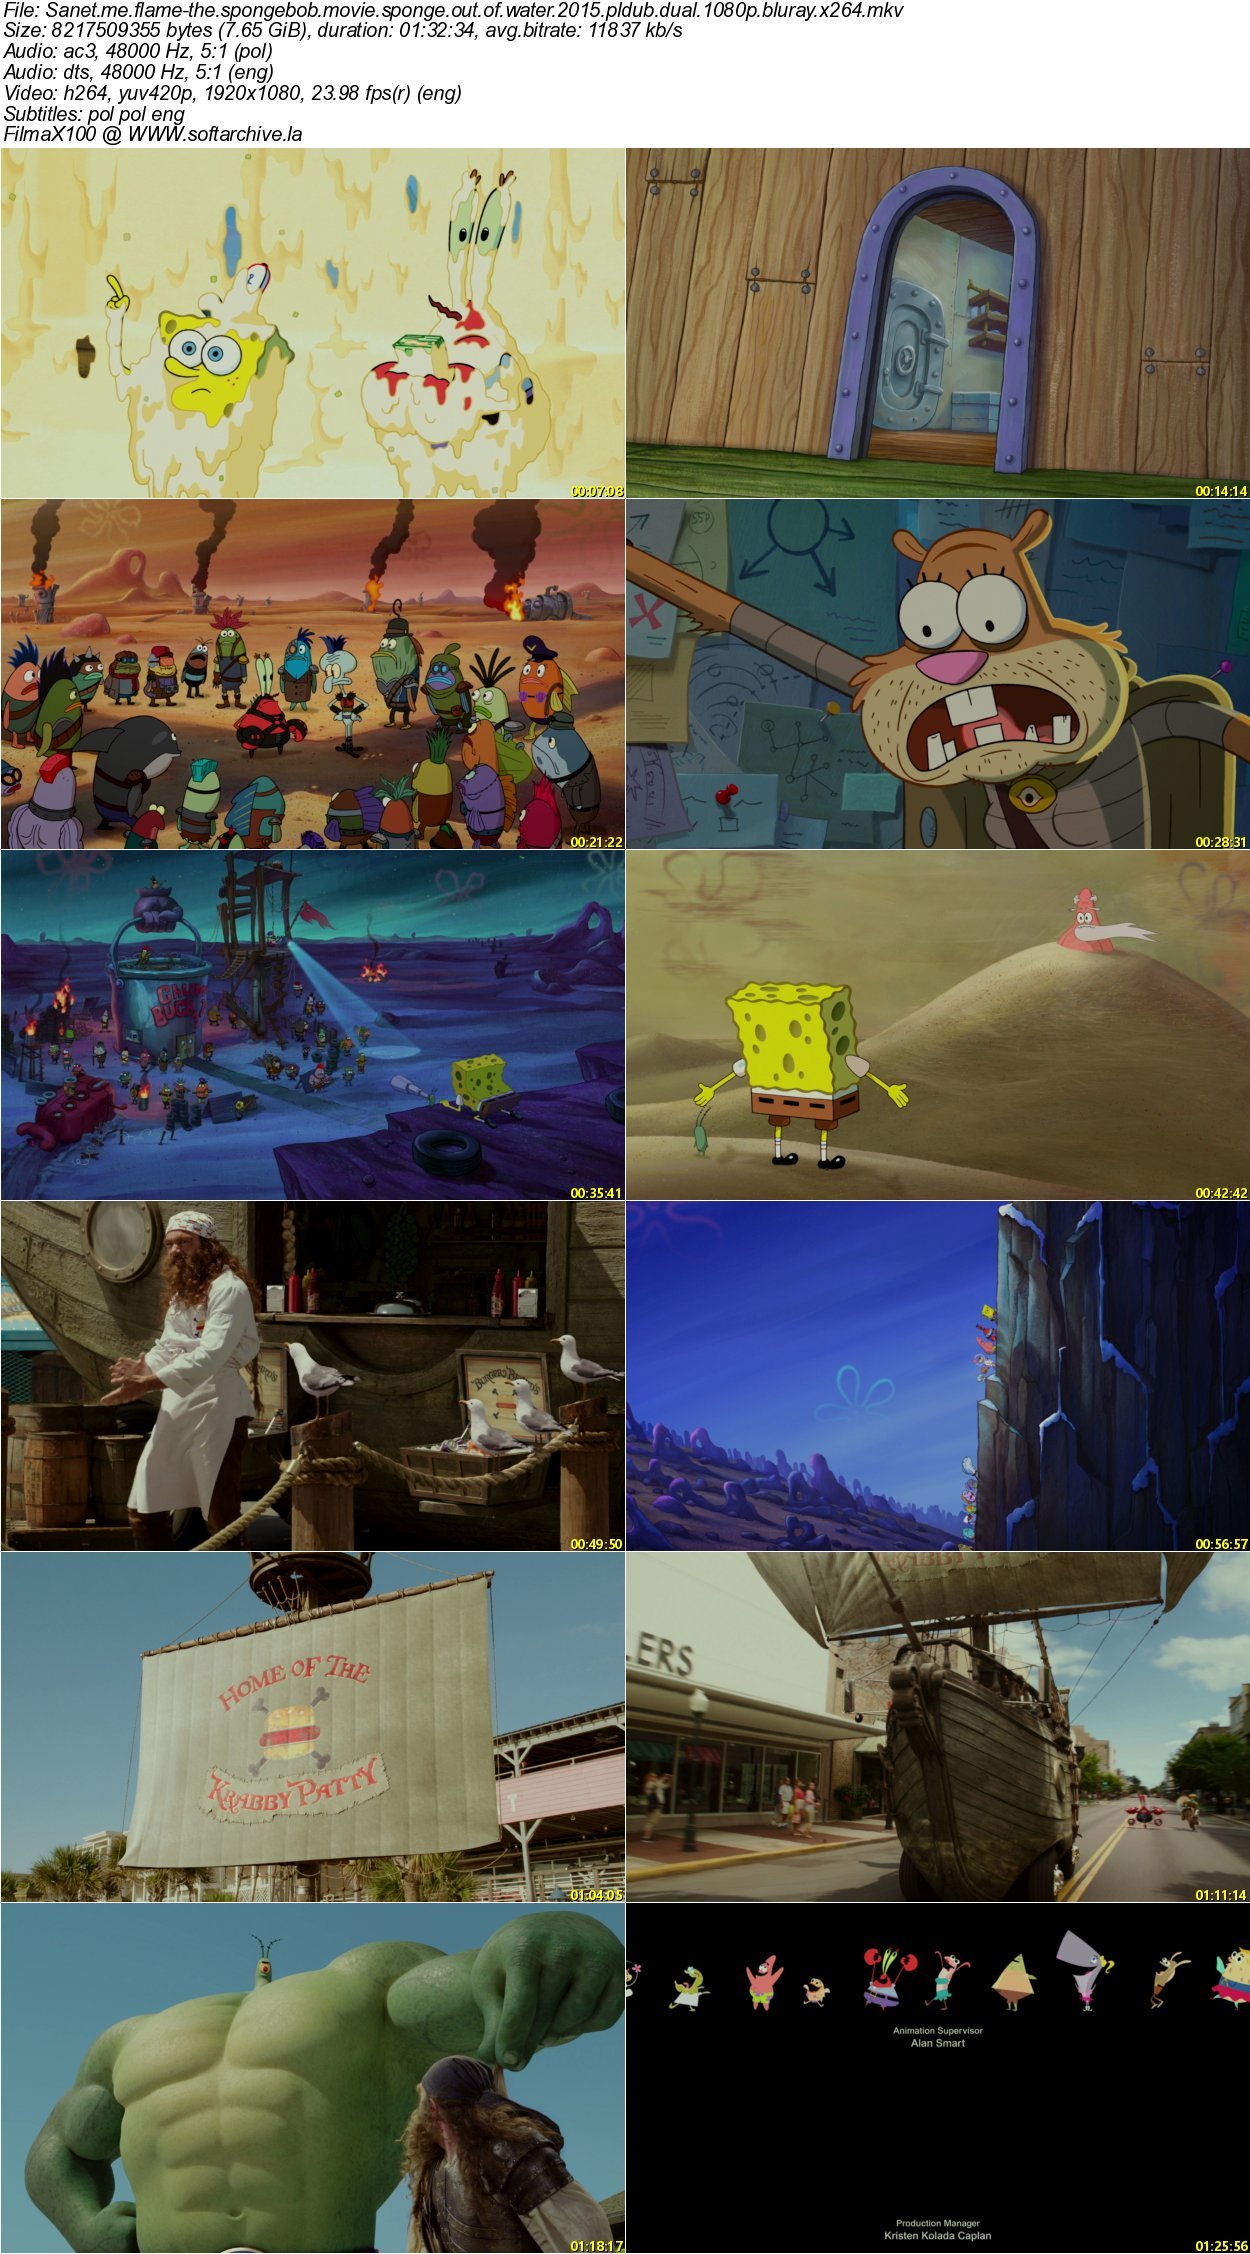 The SpongeBob Movie Sponge Out of Water 2015 PLDUB DUAL 1080p BluRay x264-F...